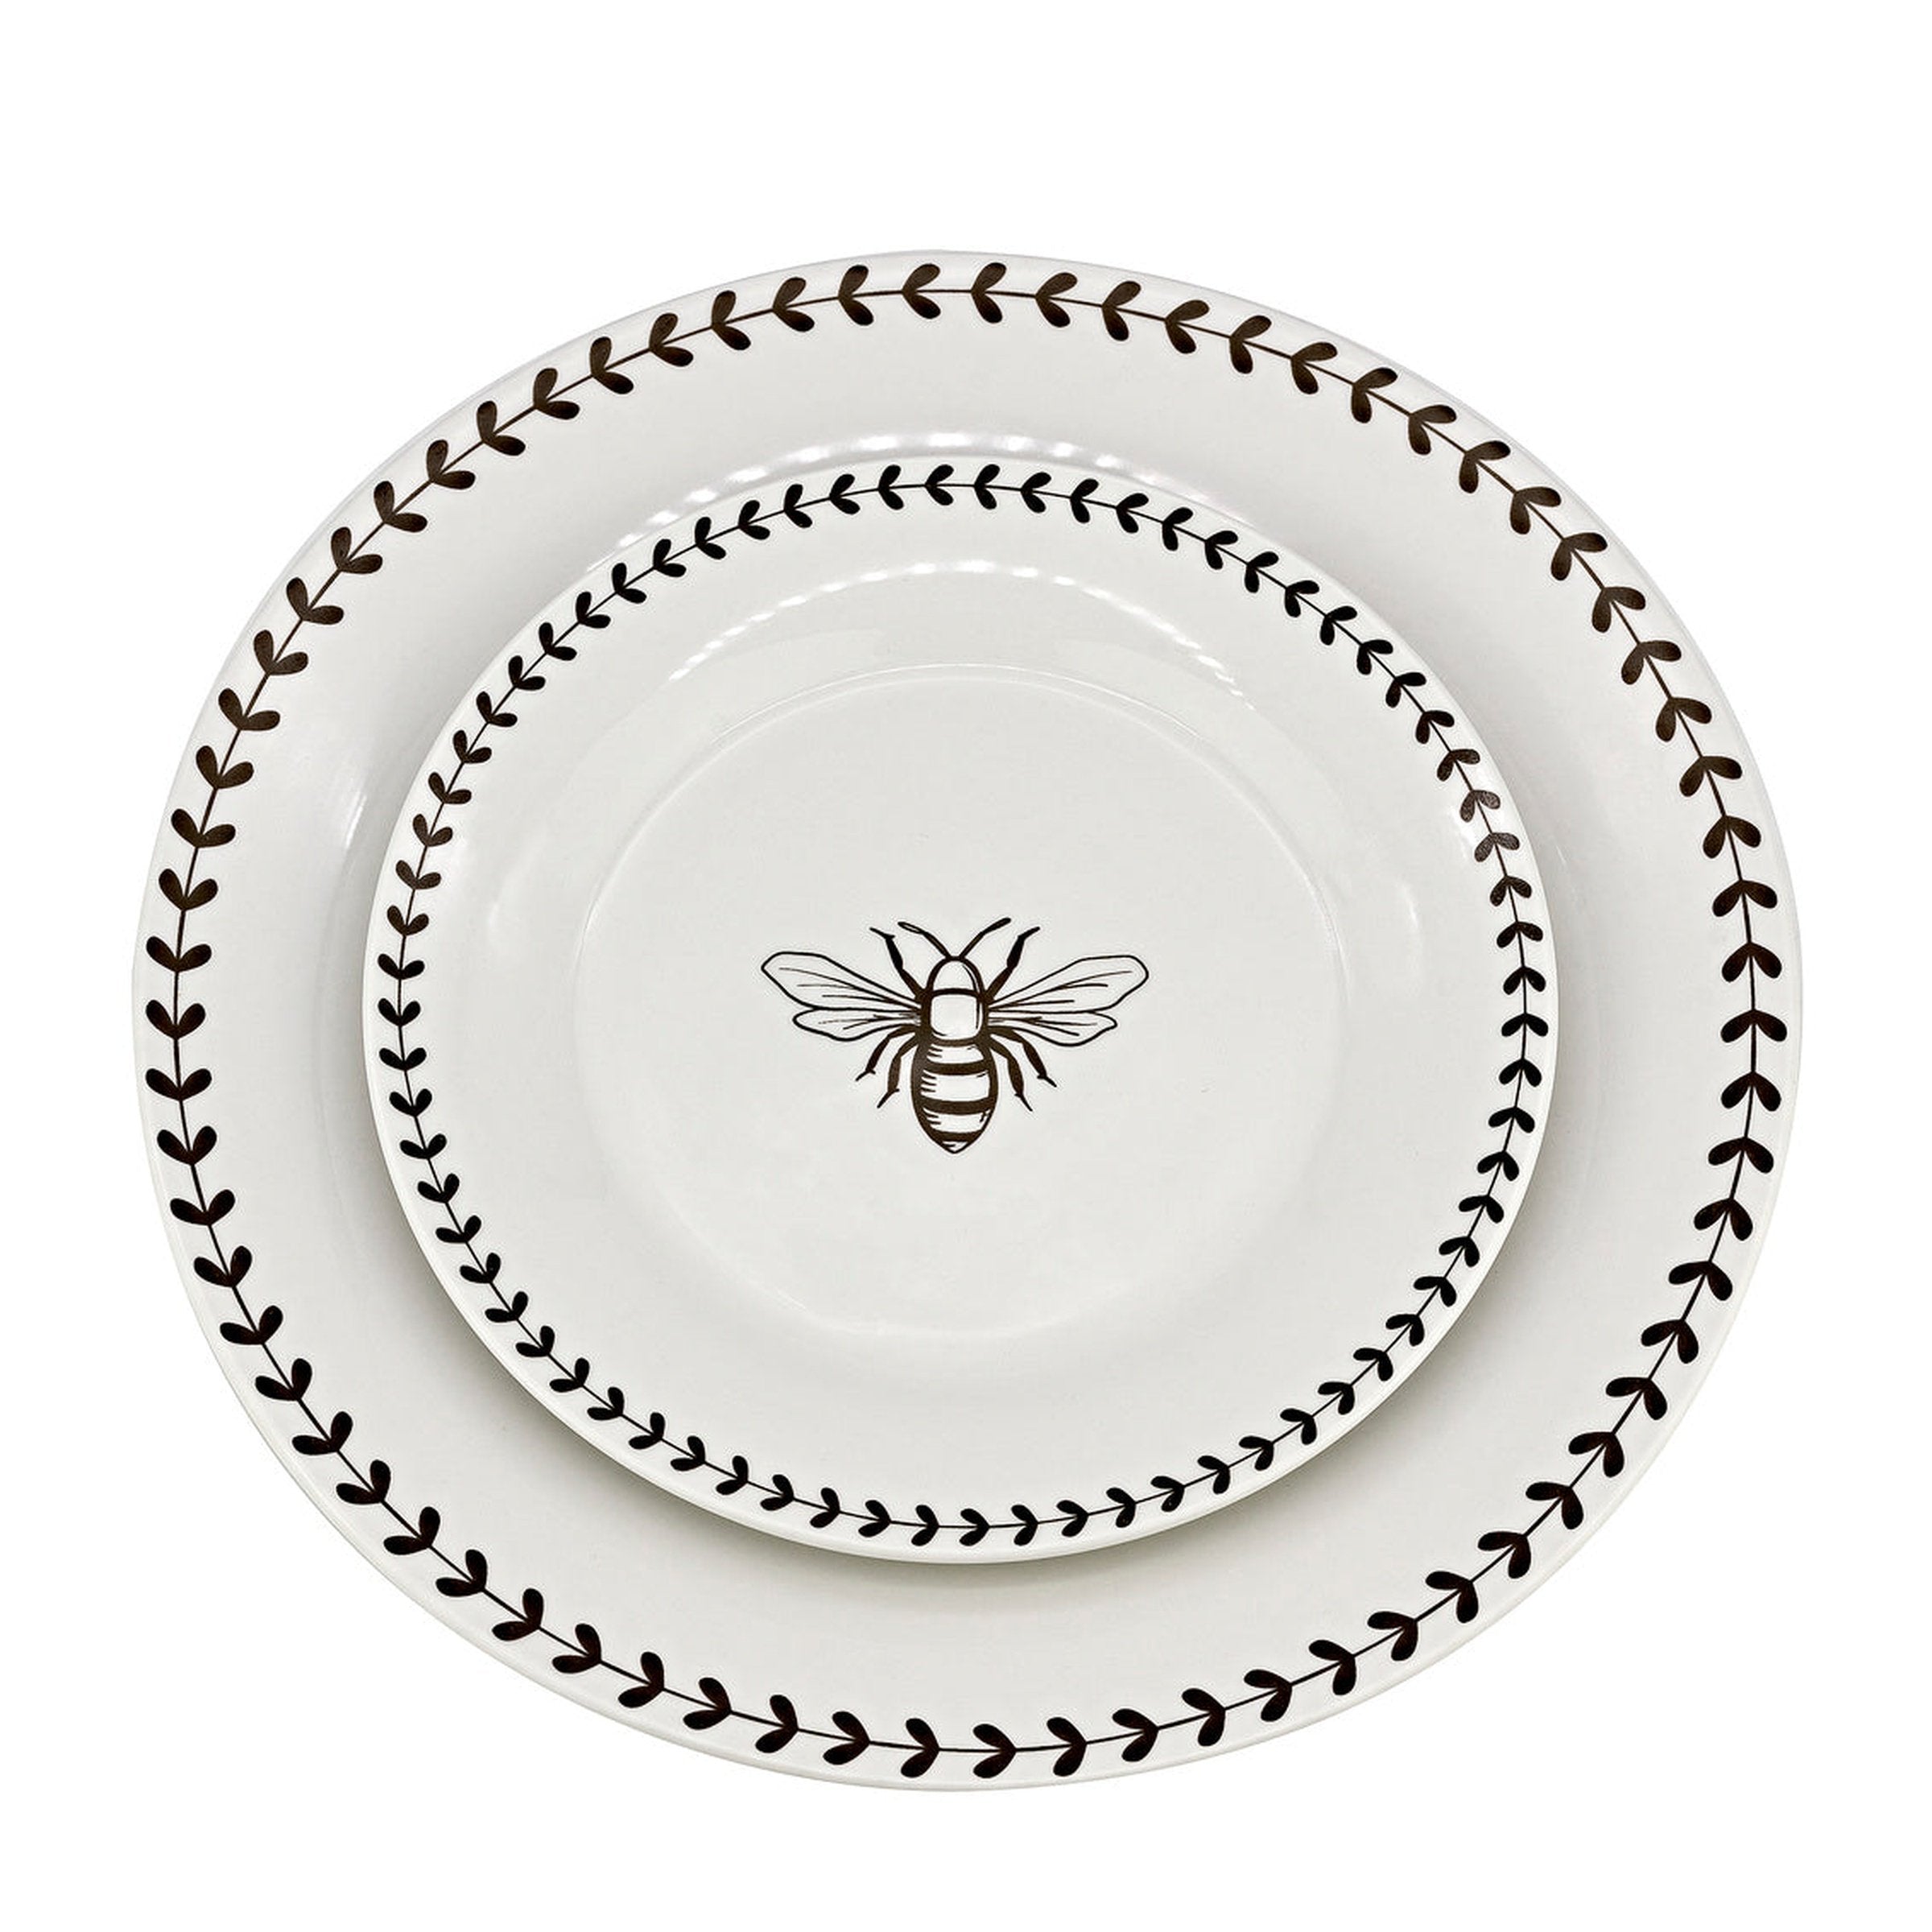 Beehive Porcelain 16 Piece Dinnerware Set, Service For 4 – Godinger